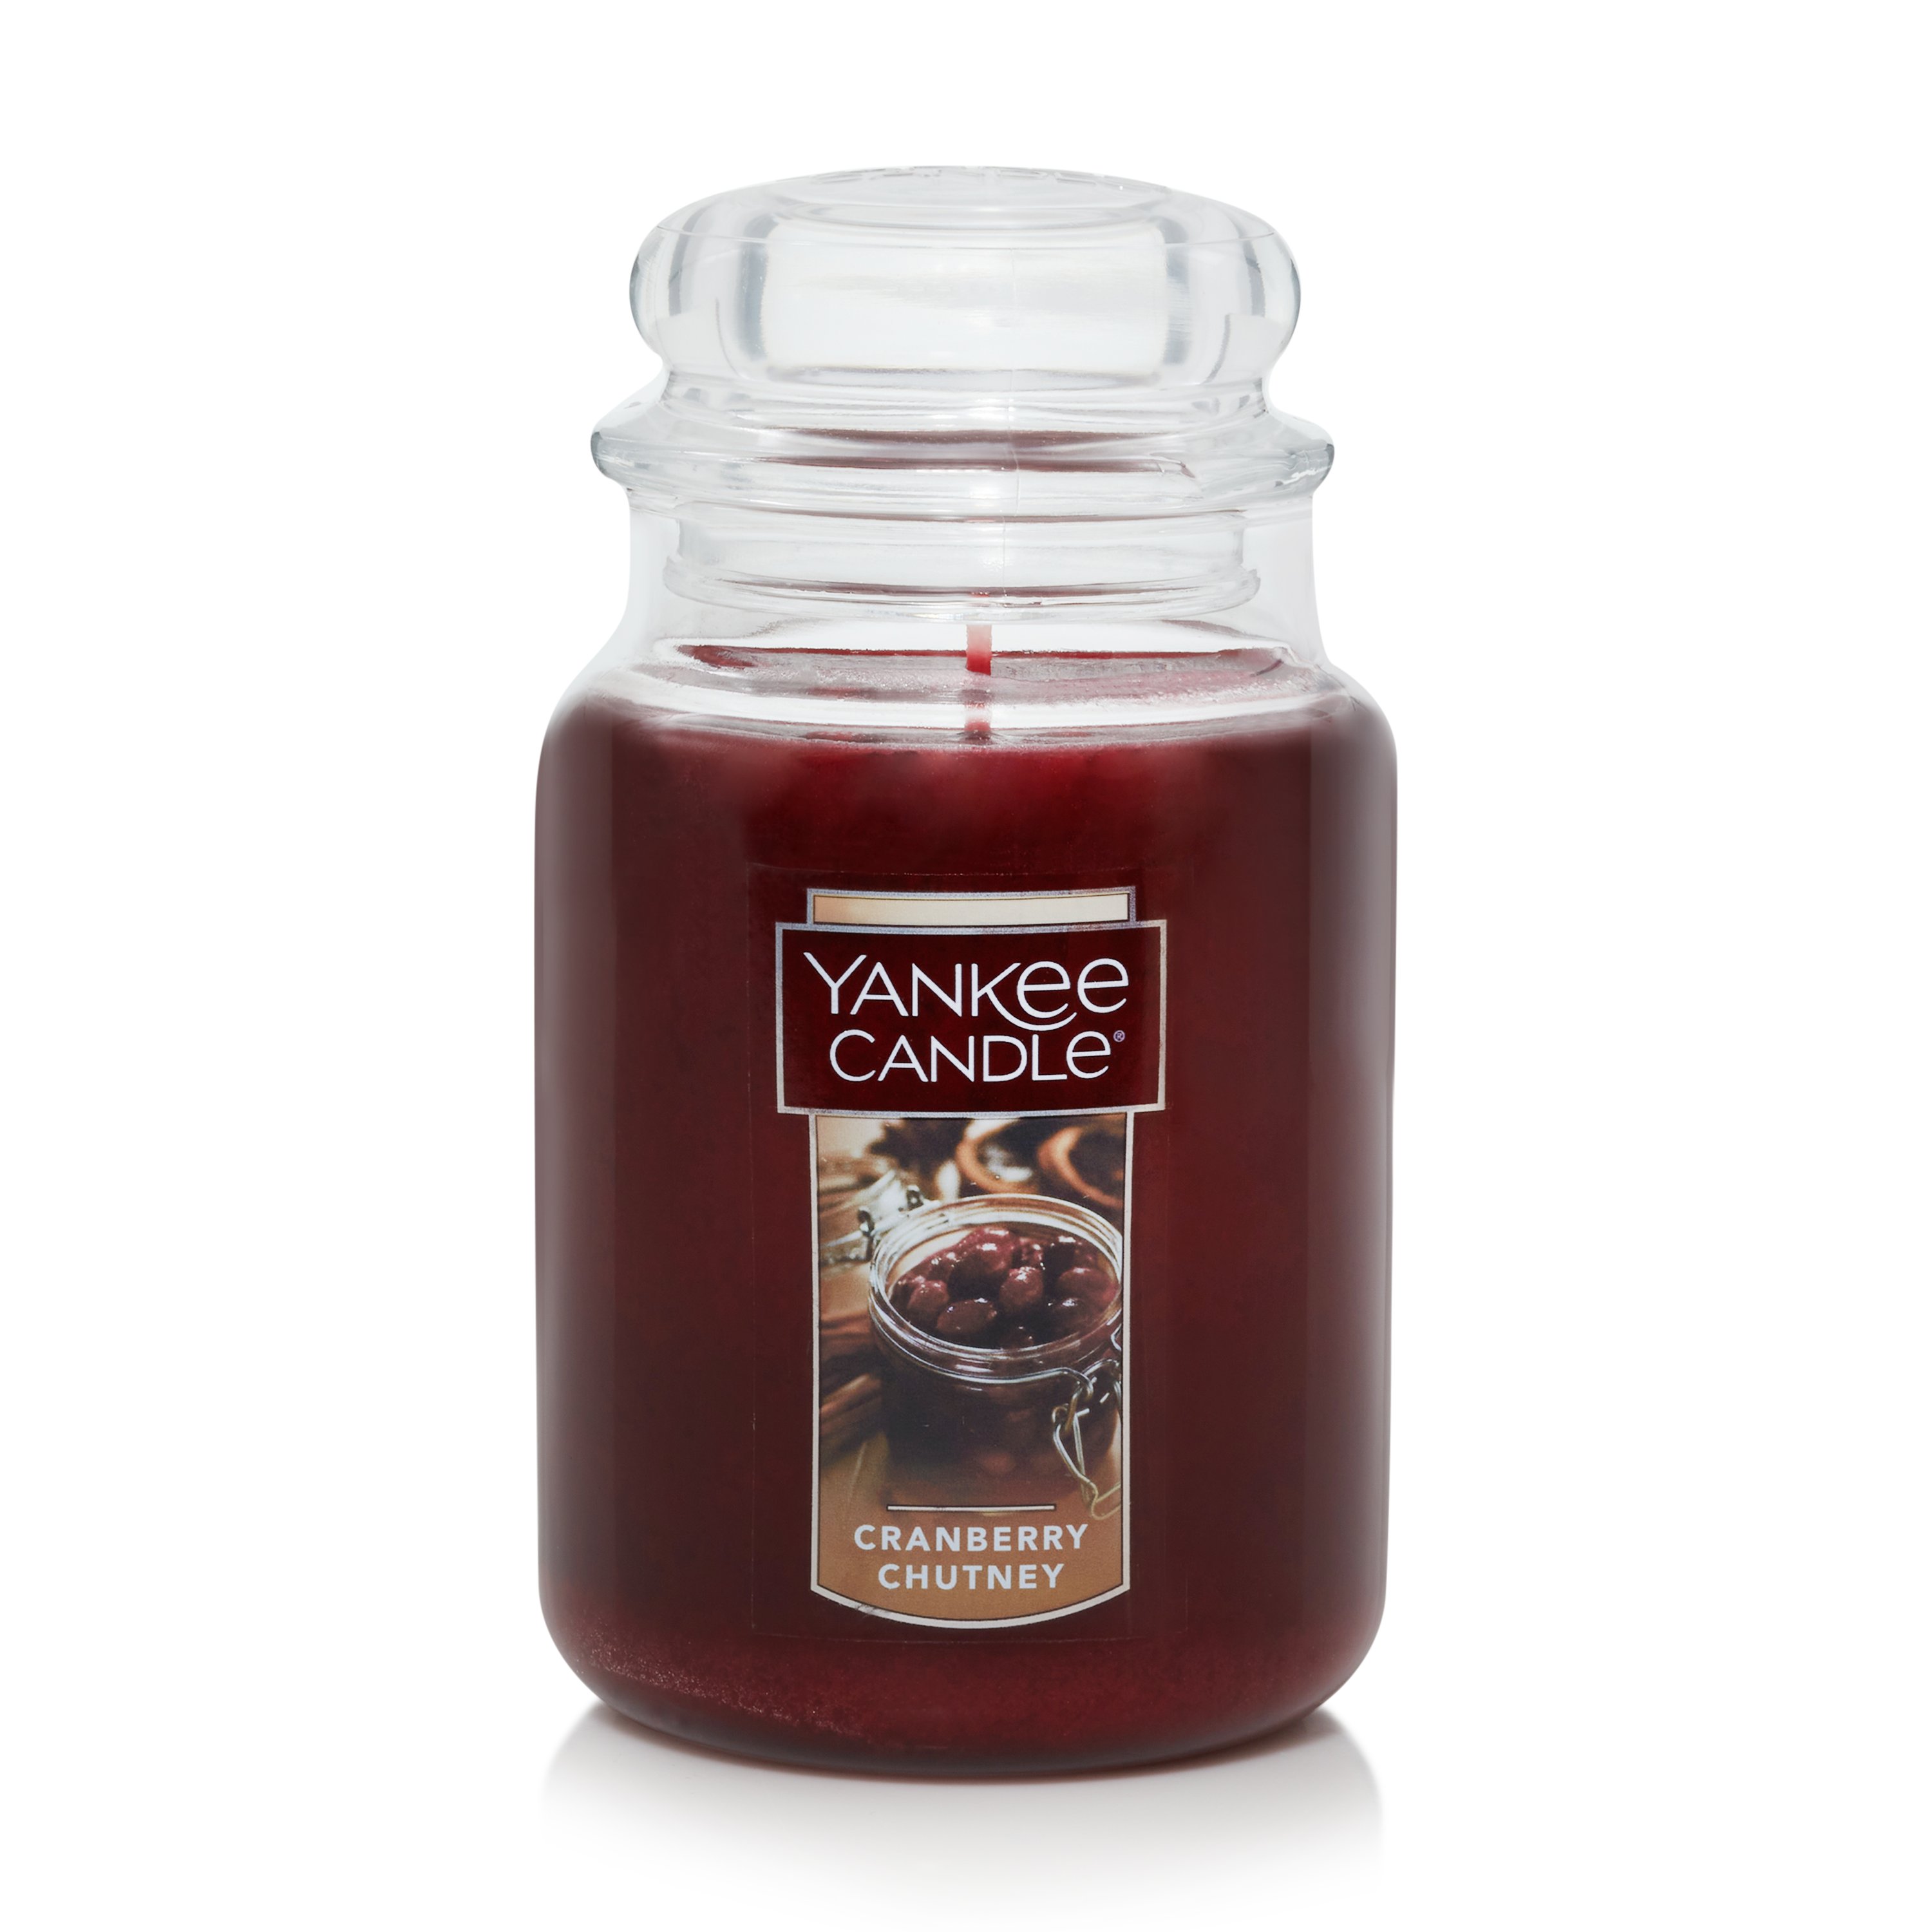 Yankee Candle CRANBERRY CHUTNEY Fragranced Wax Melts - New